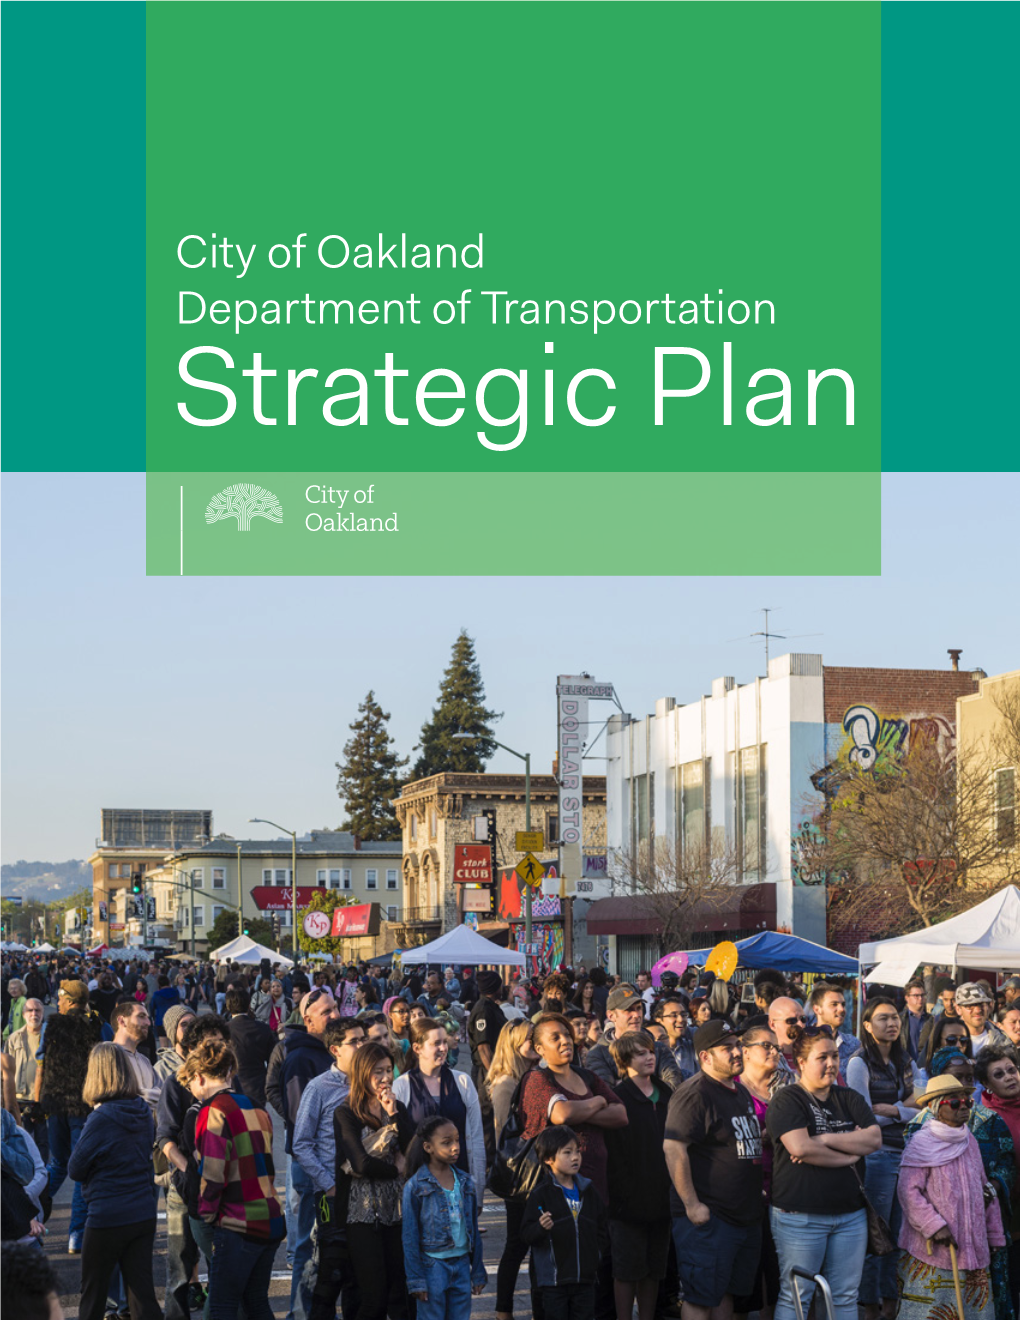 City of Oakland Department of Transportation Strategic Plan